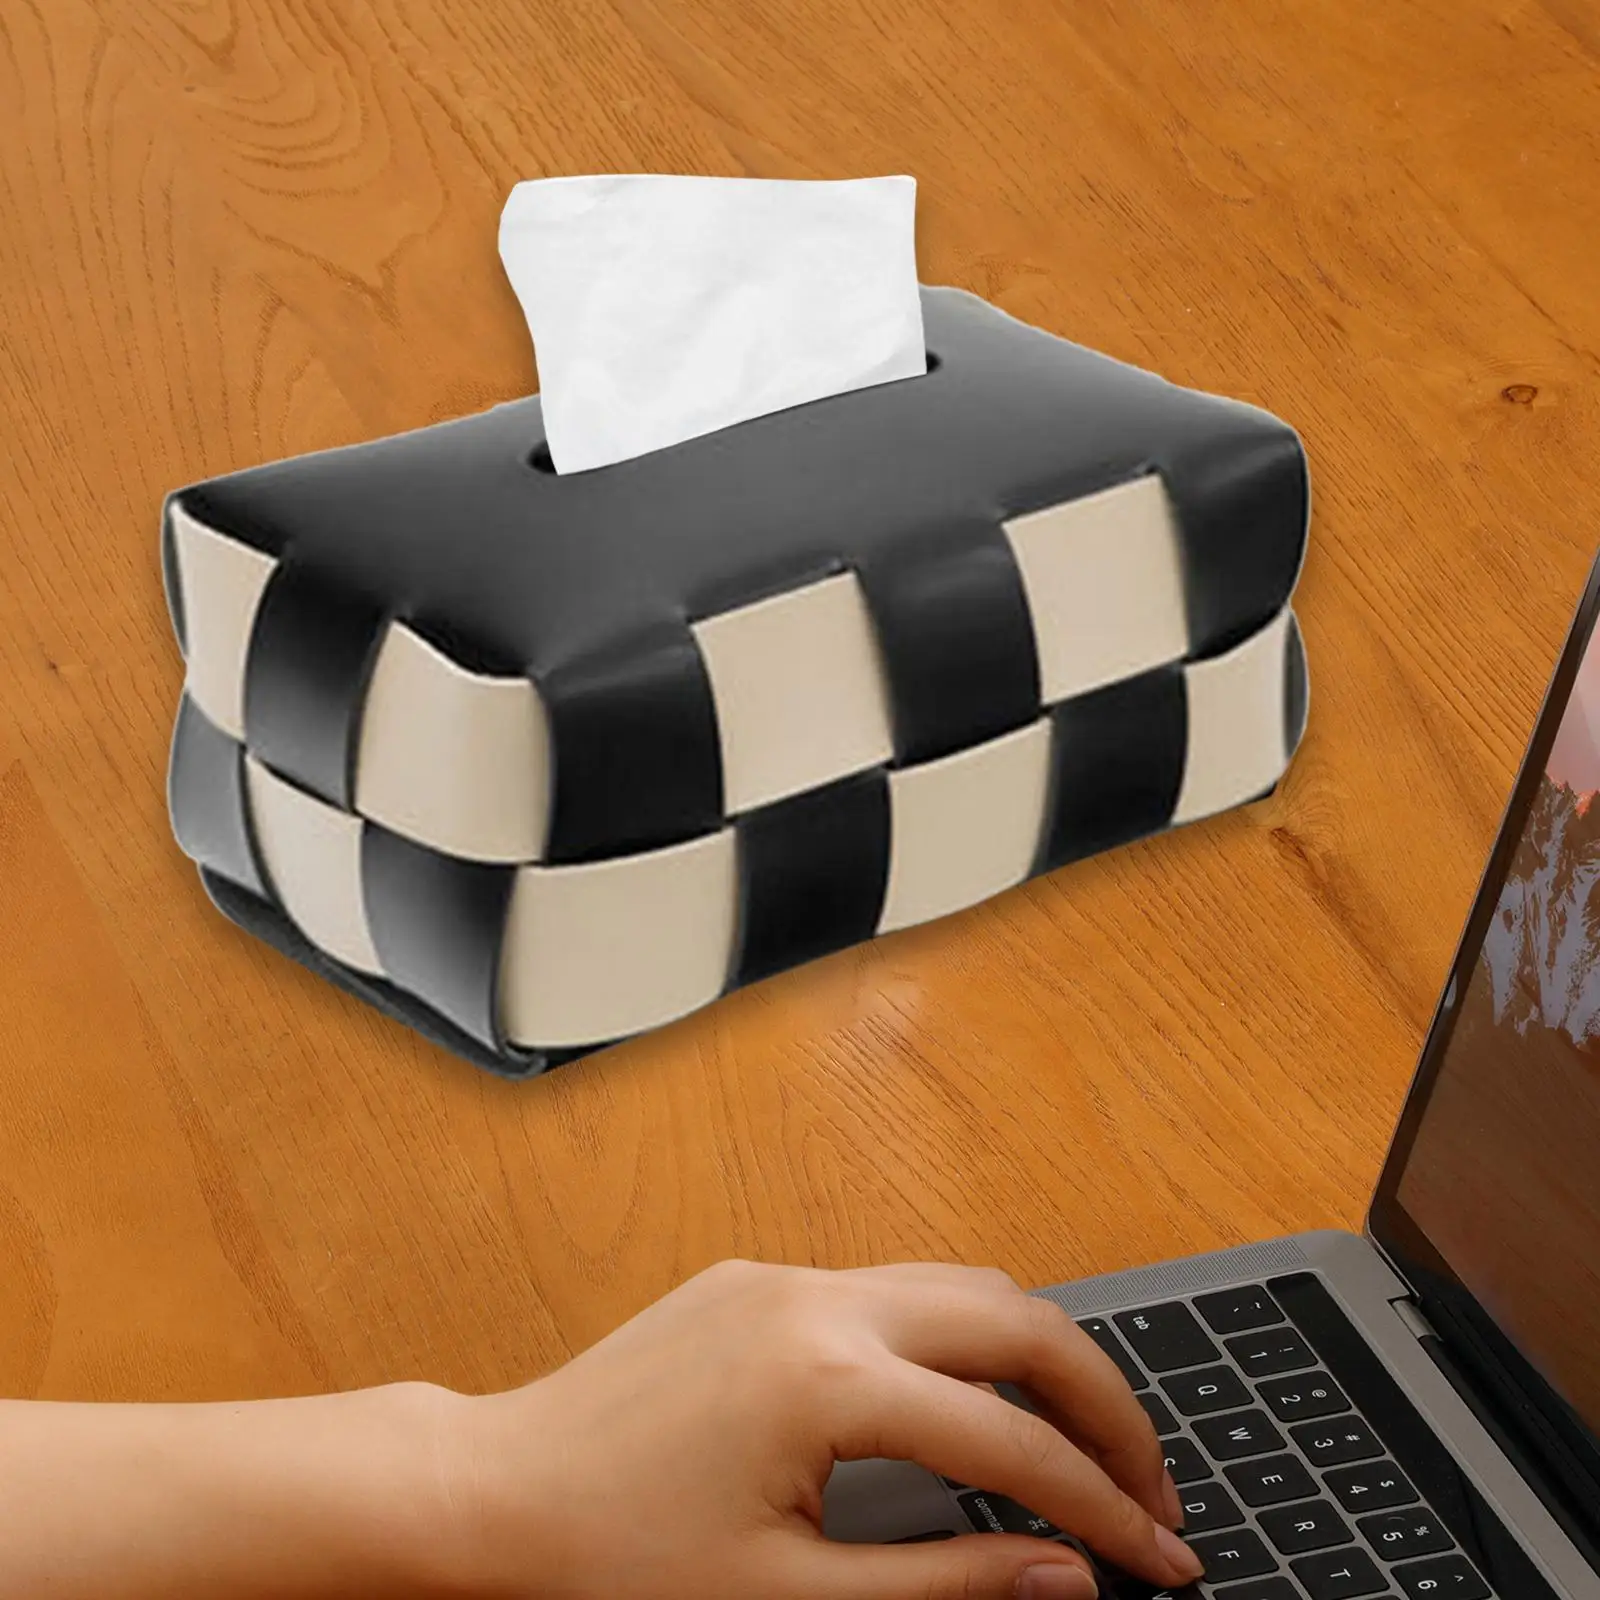 Tissue Box Tissue Holder Cover Decorative Rectangular for Tables and Desks